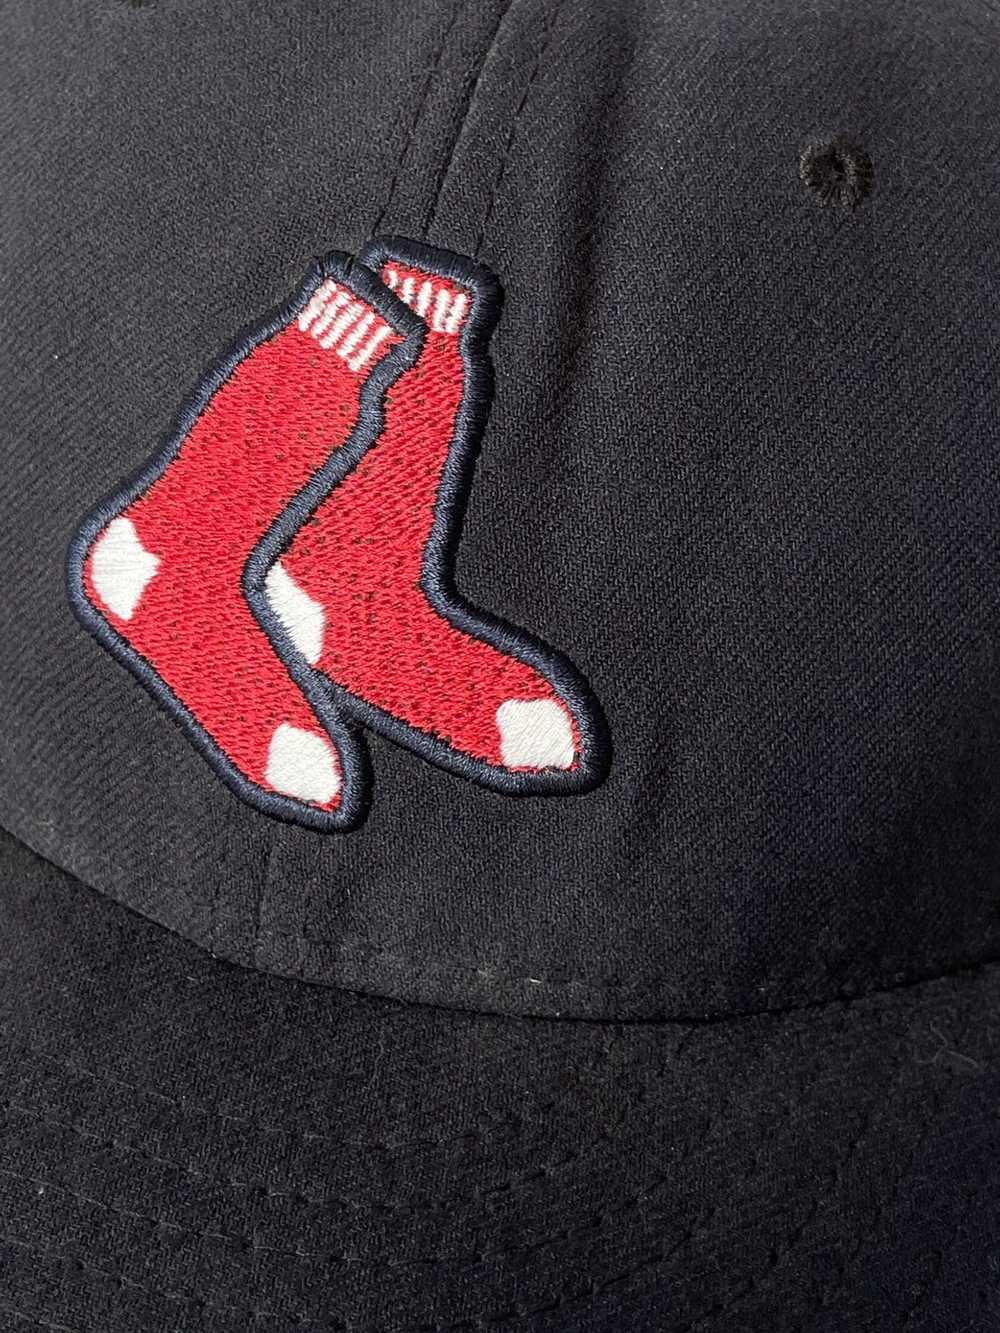 MLB × New Era × Vintage New Era x MLB red socks c… - image 2